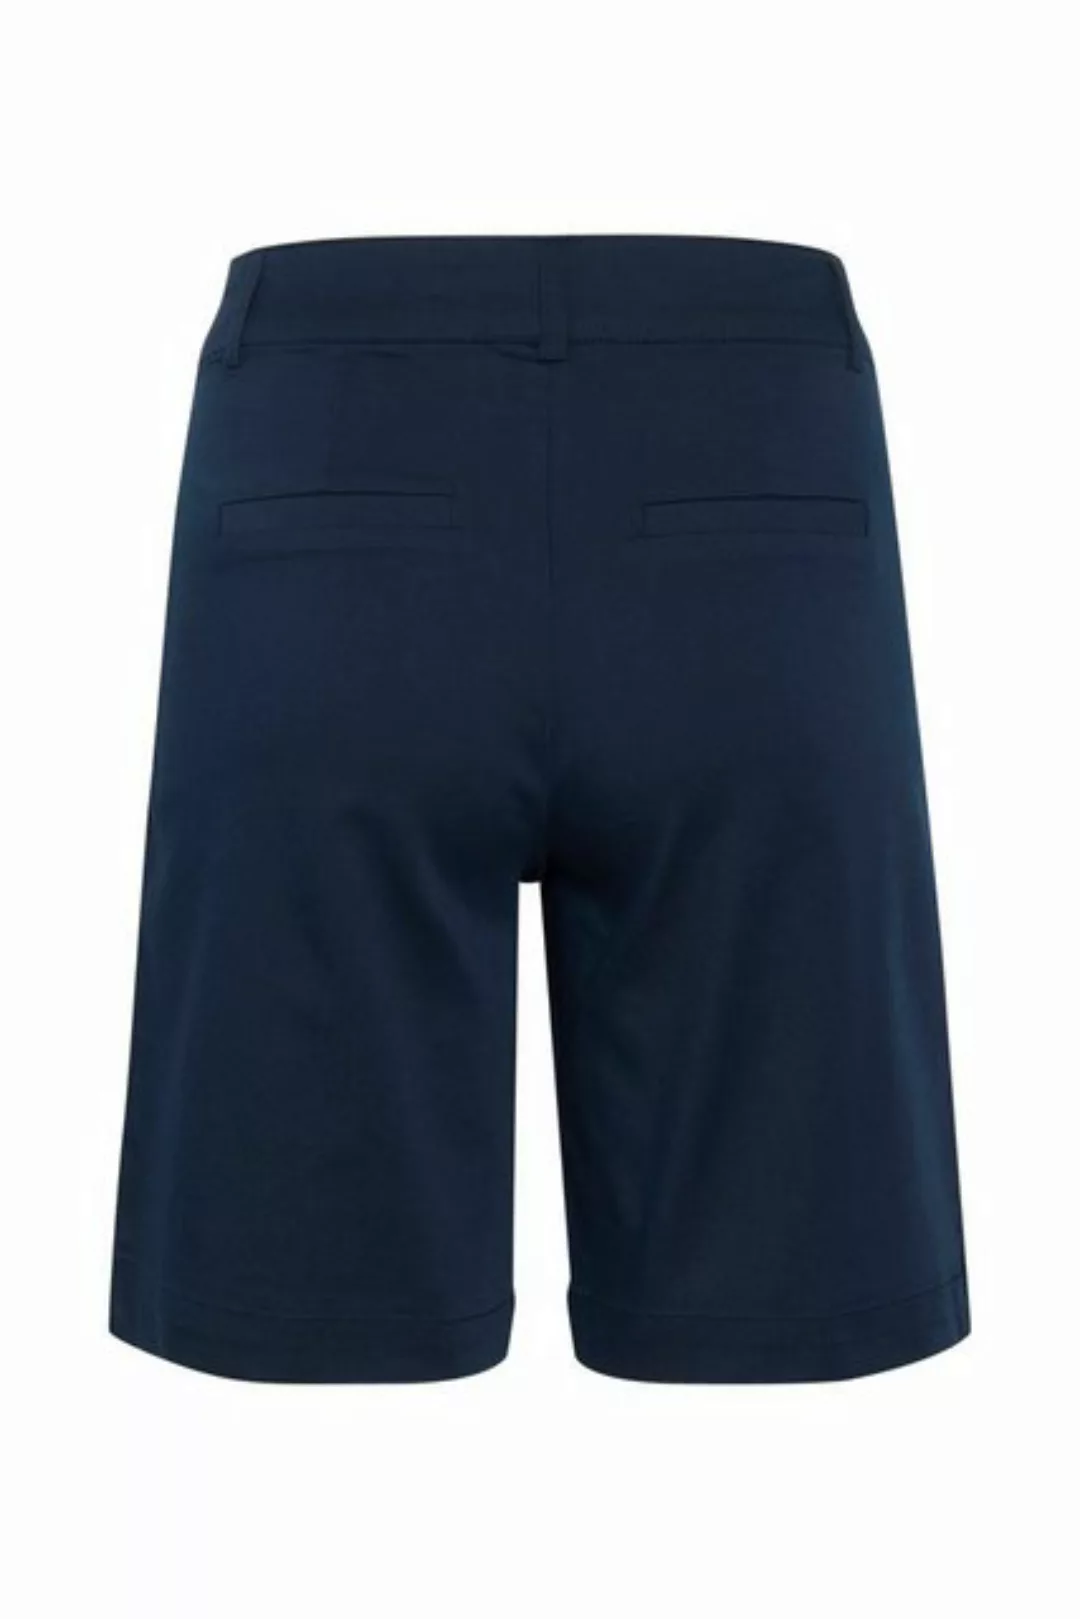 KAFFE Shorts Shorts KAlea günstig online kaufen